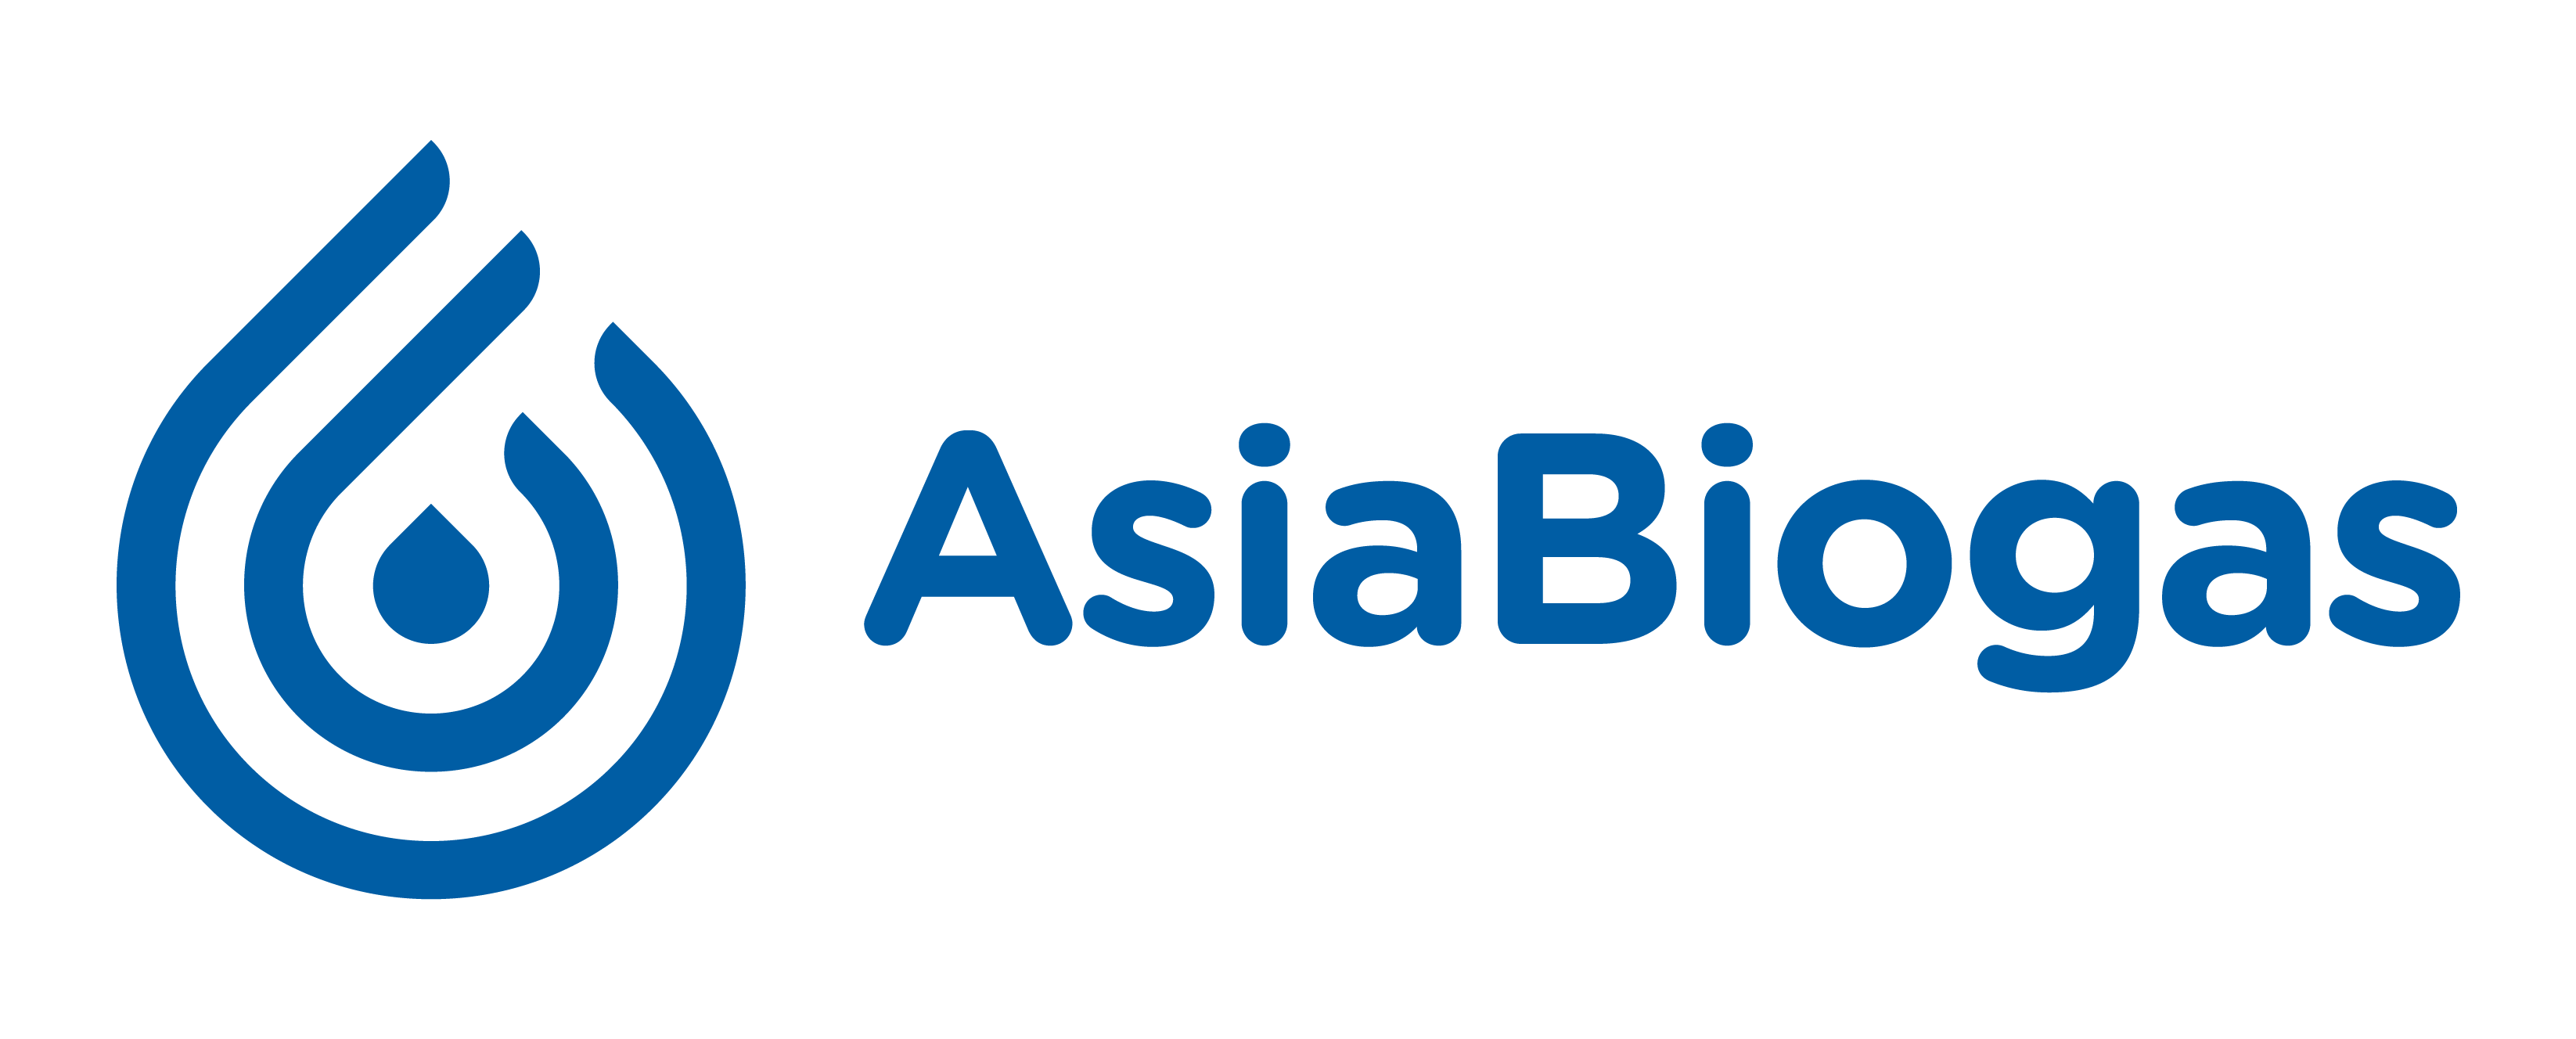 Asia Biogas (Thailand) Co., Ltd.